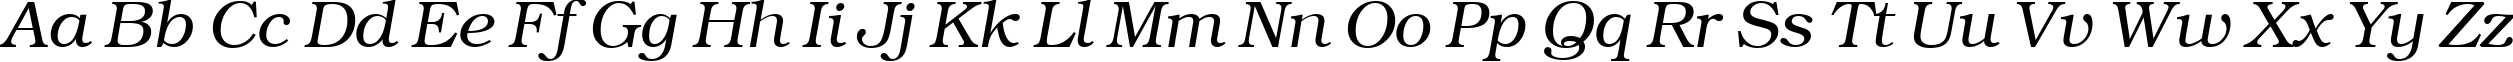 Пример написания английского алфавита шрифтом BookmanCTT Italic